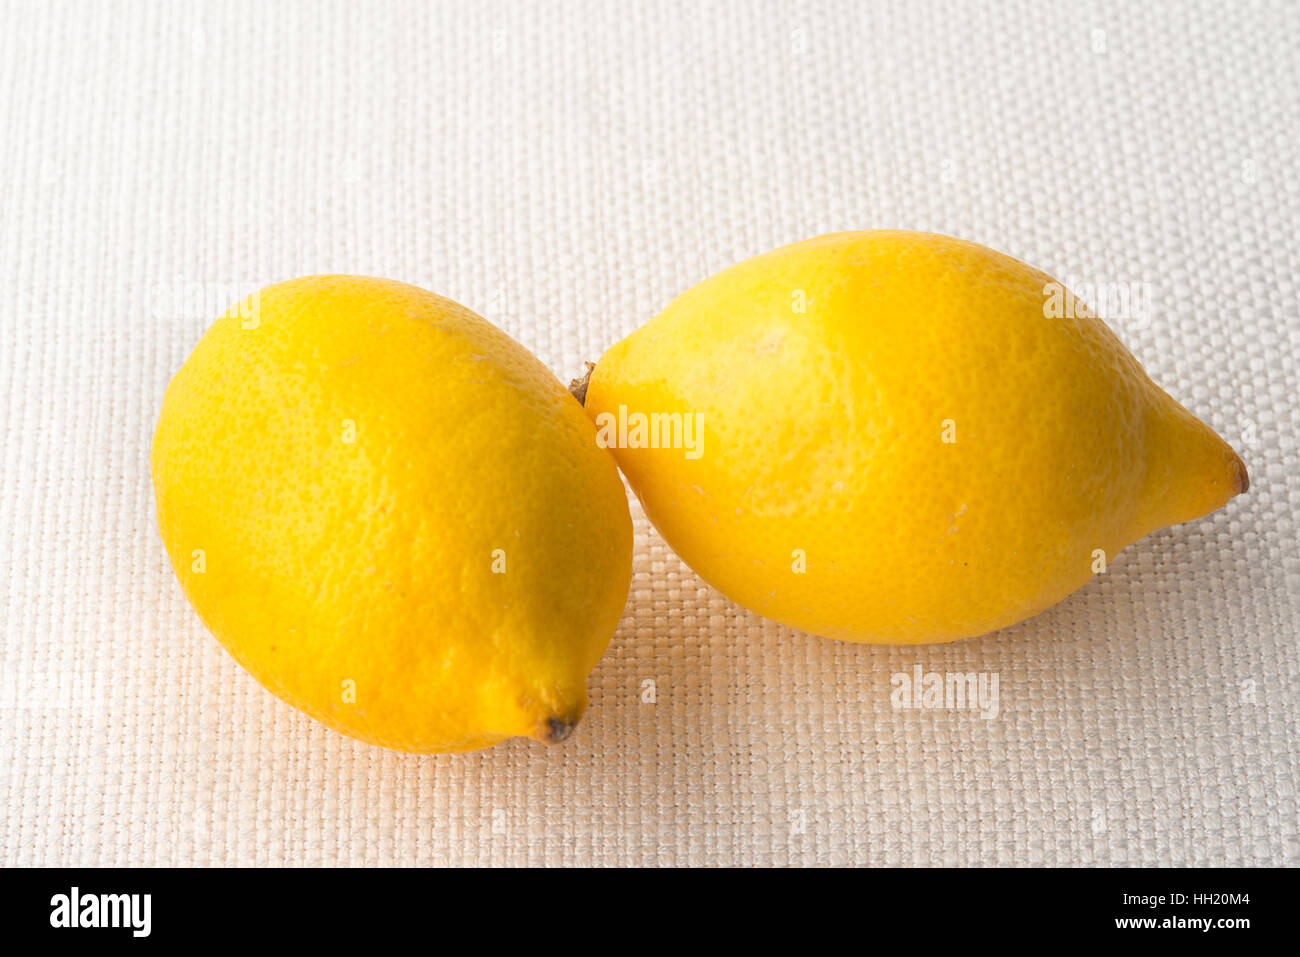 lemons on a table Stock Photo